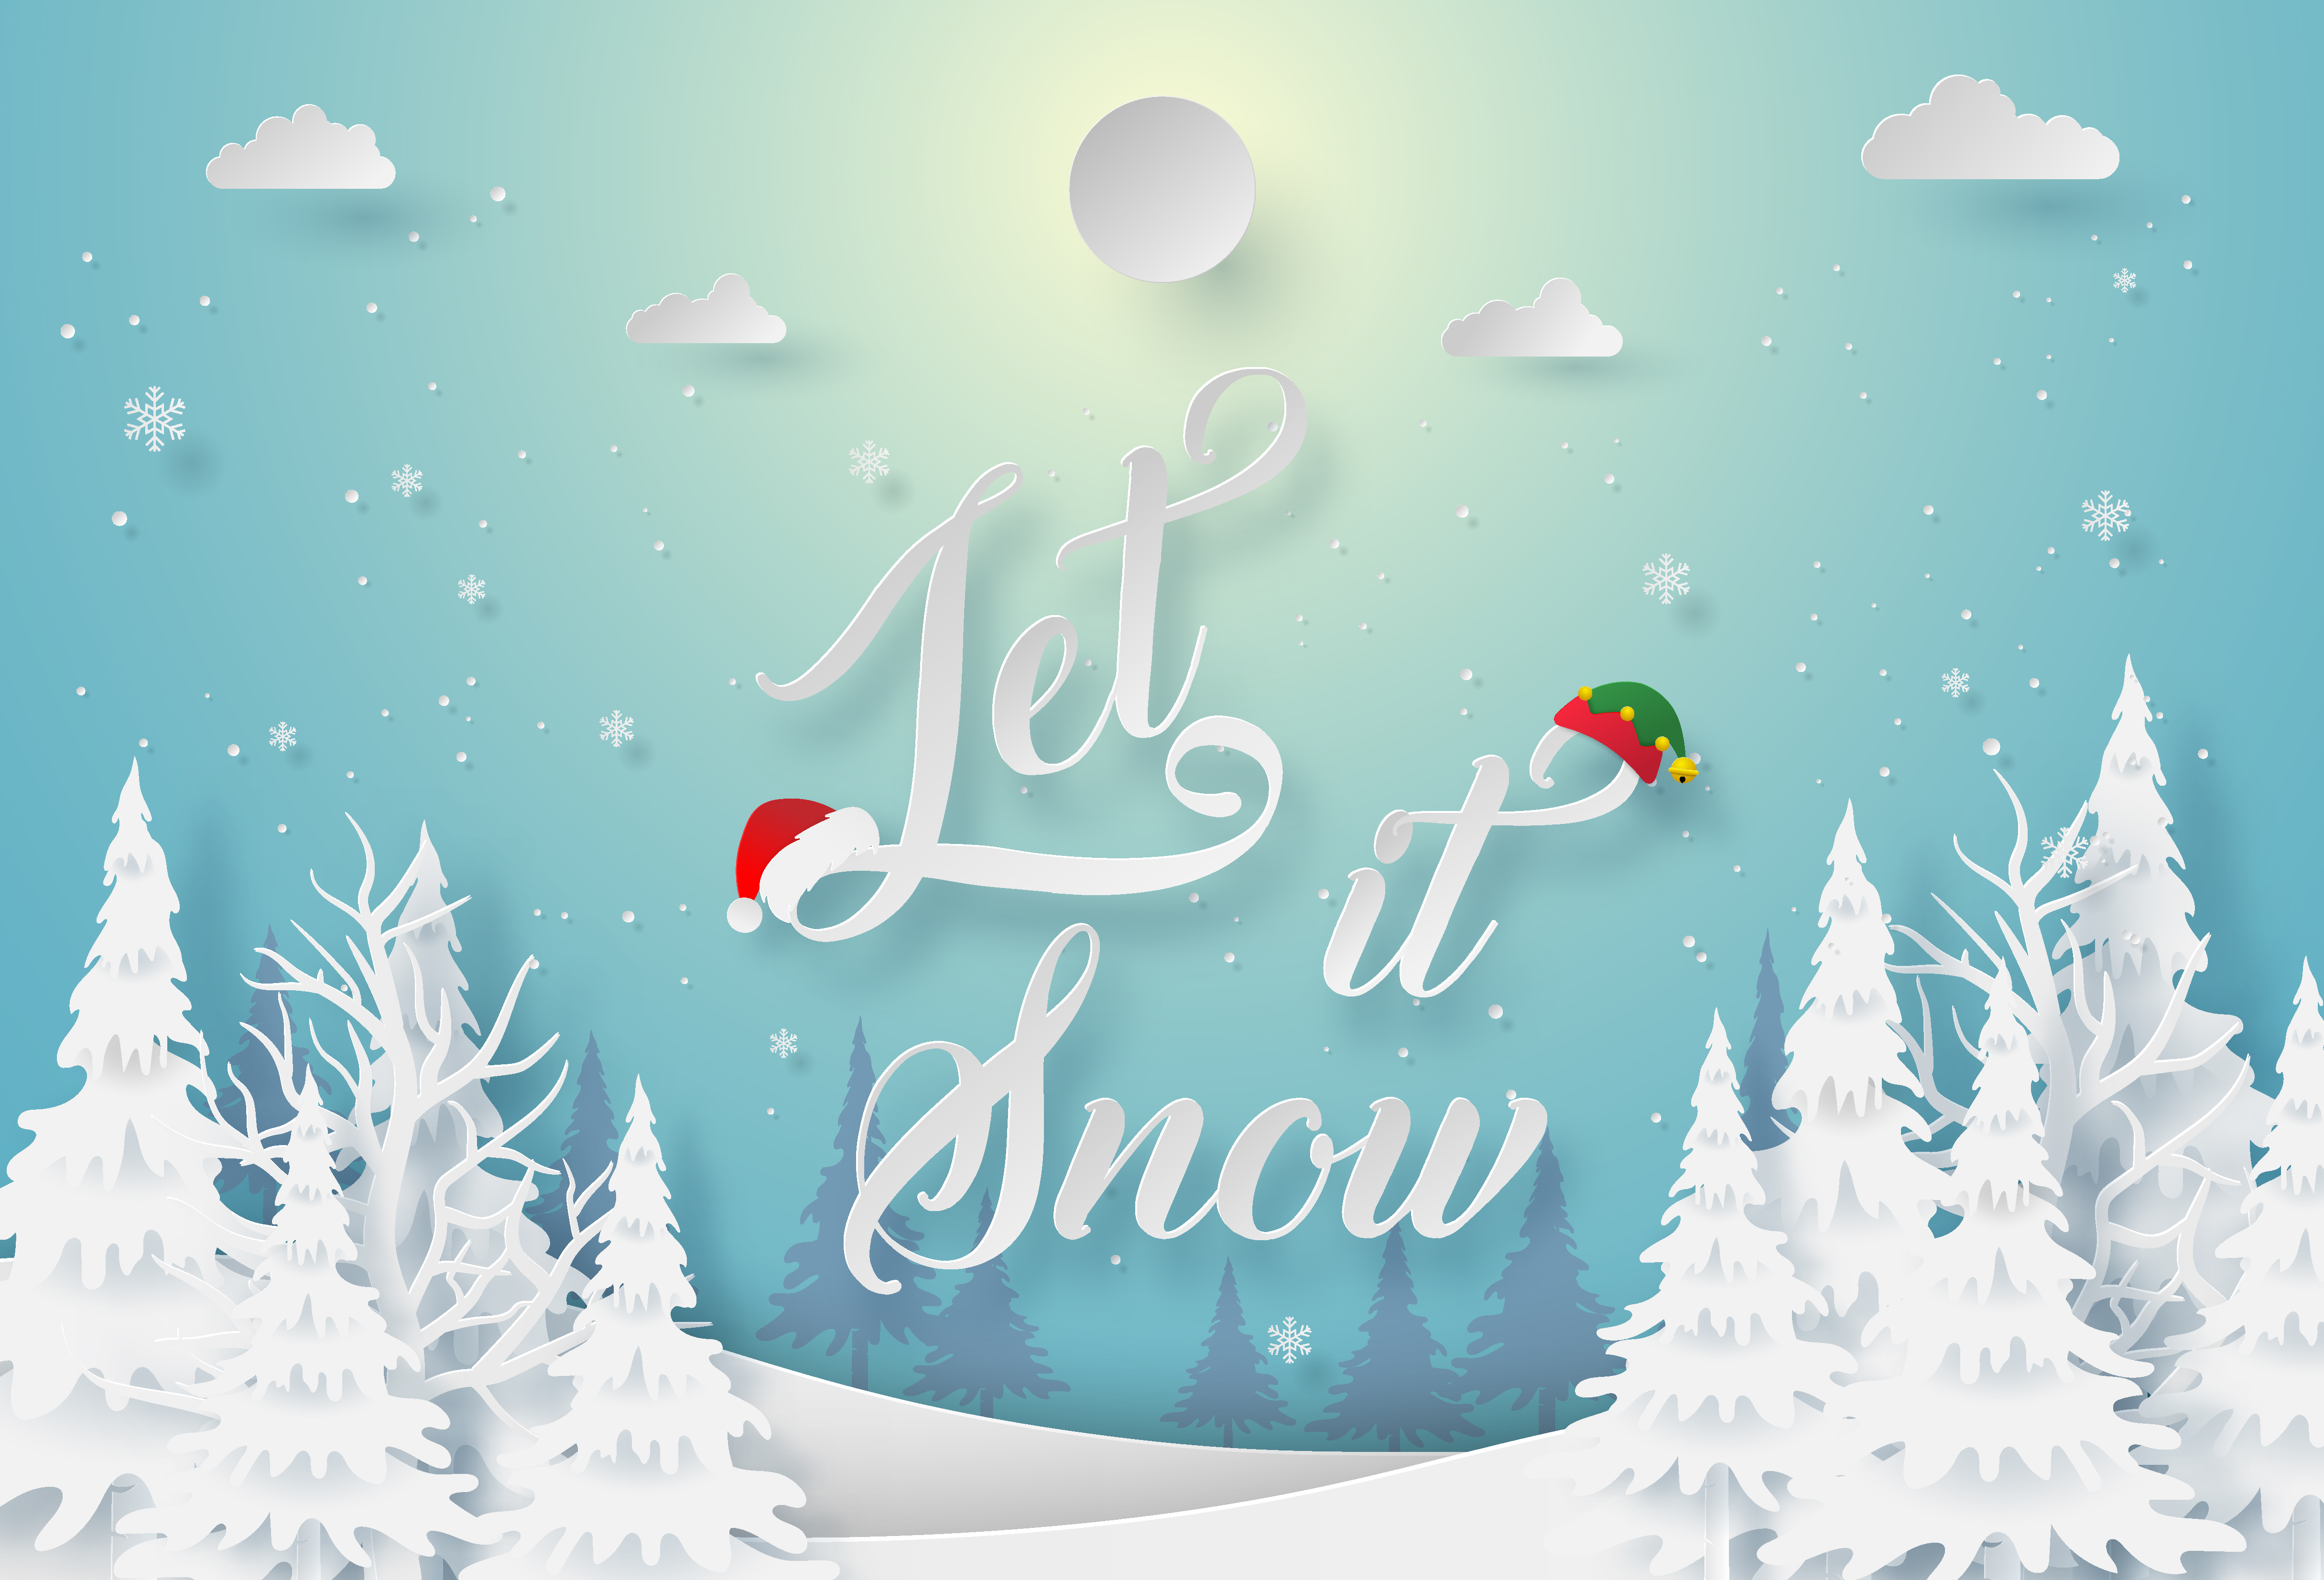 Let it snow card 673651 Vector Art at Vecteezy